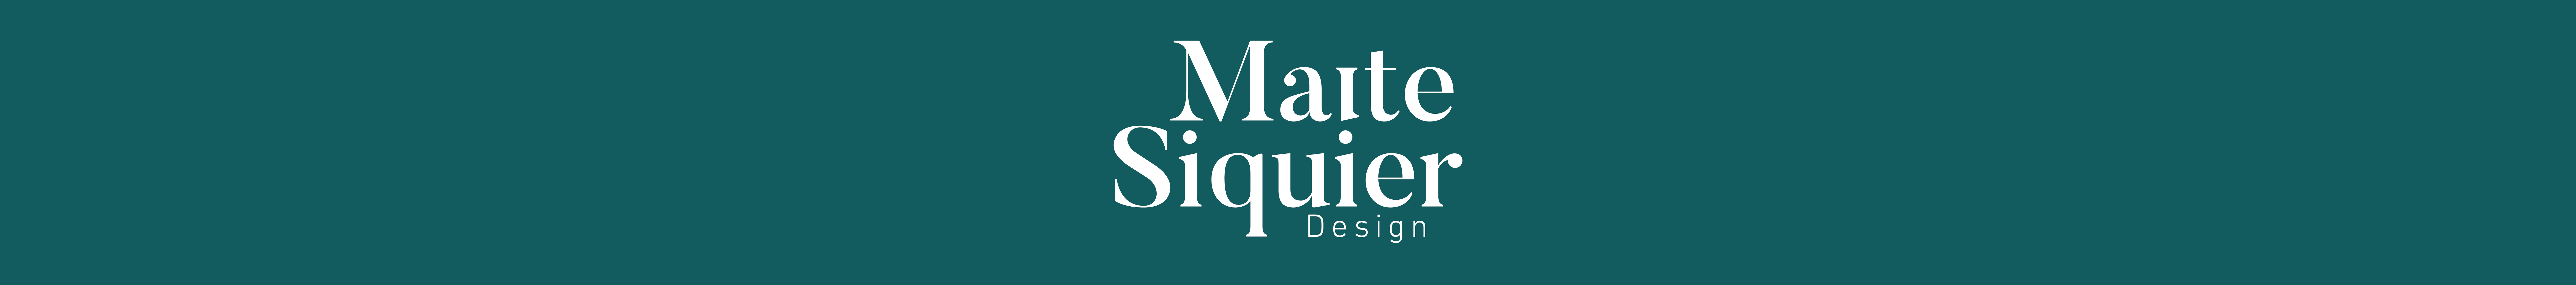 Баннер профиля Maite Siquier